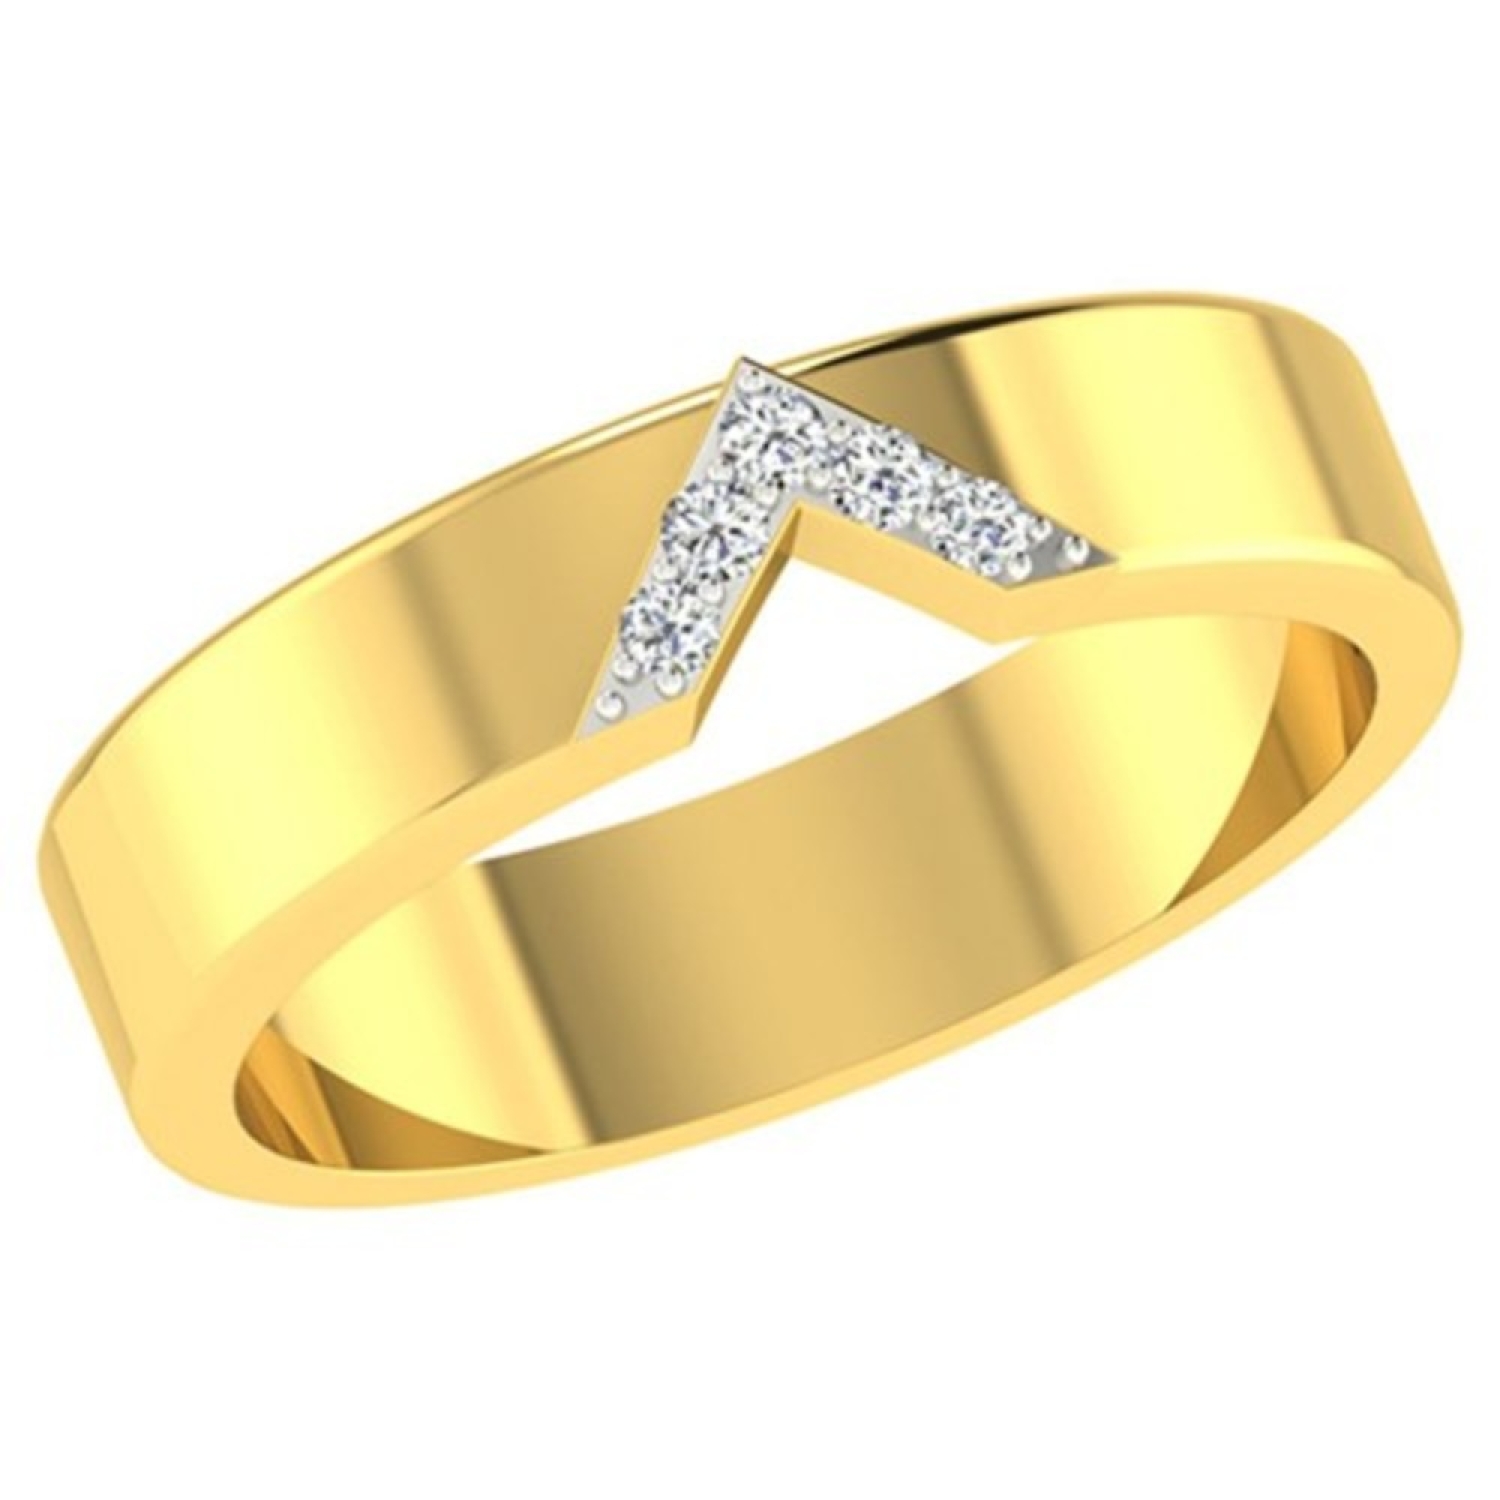 Buy Chevron Diamond Ring, Gold Chevron Ring, Stacking Ring, V Ring, Midi  Ring, V Shaped Ring, Knuckle Ring, Skinny Ring Online in India - Etsy